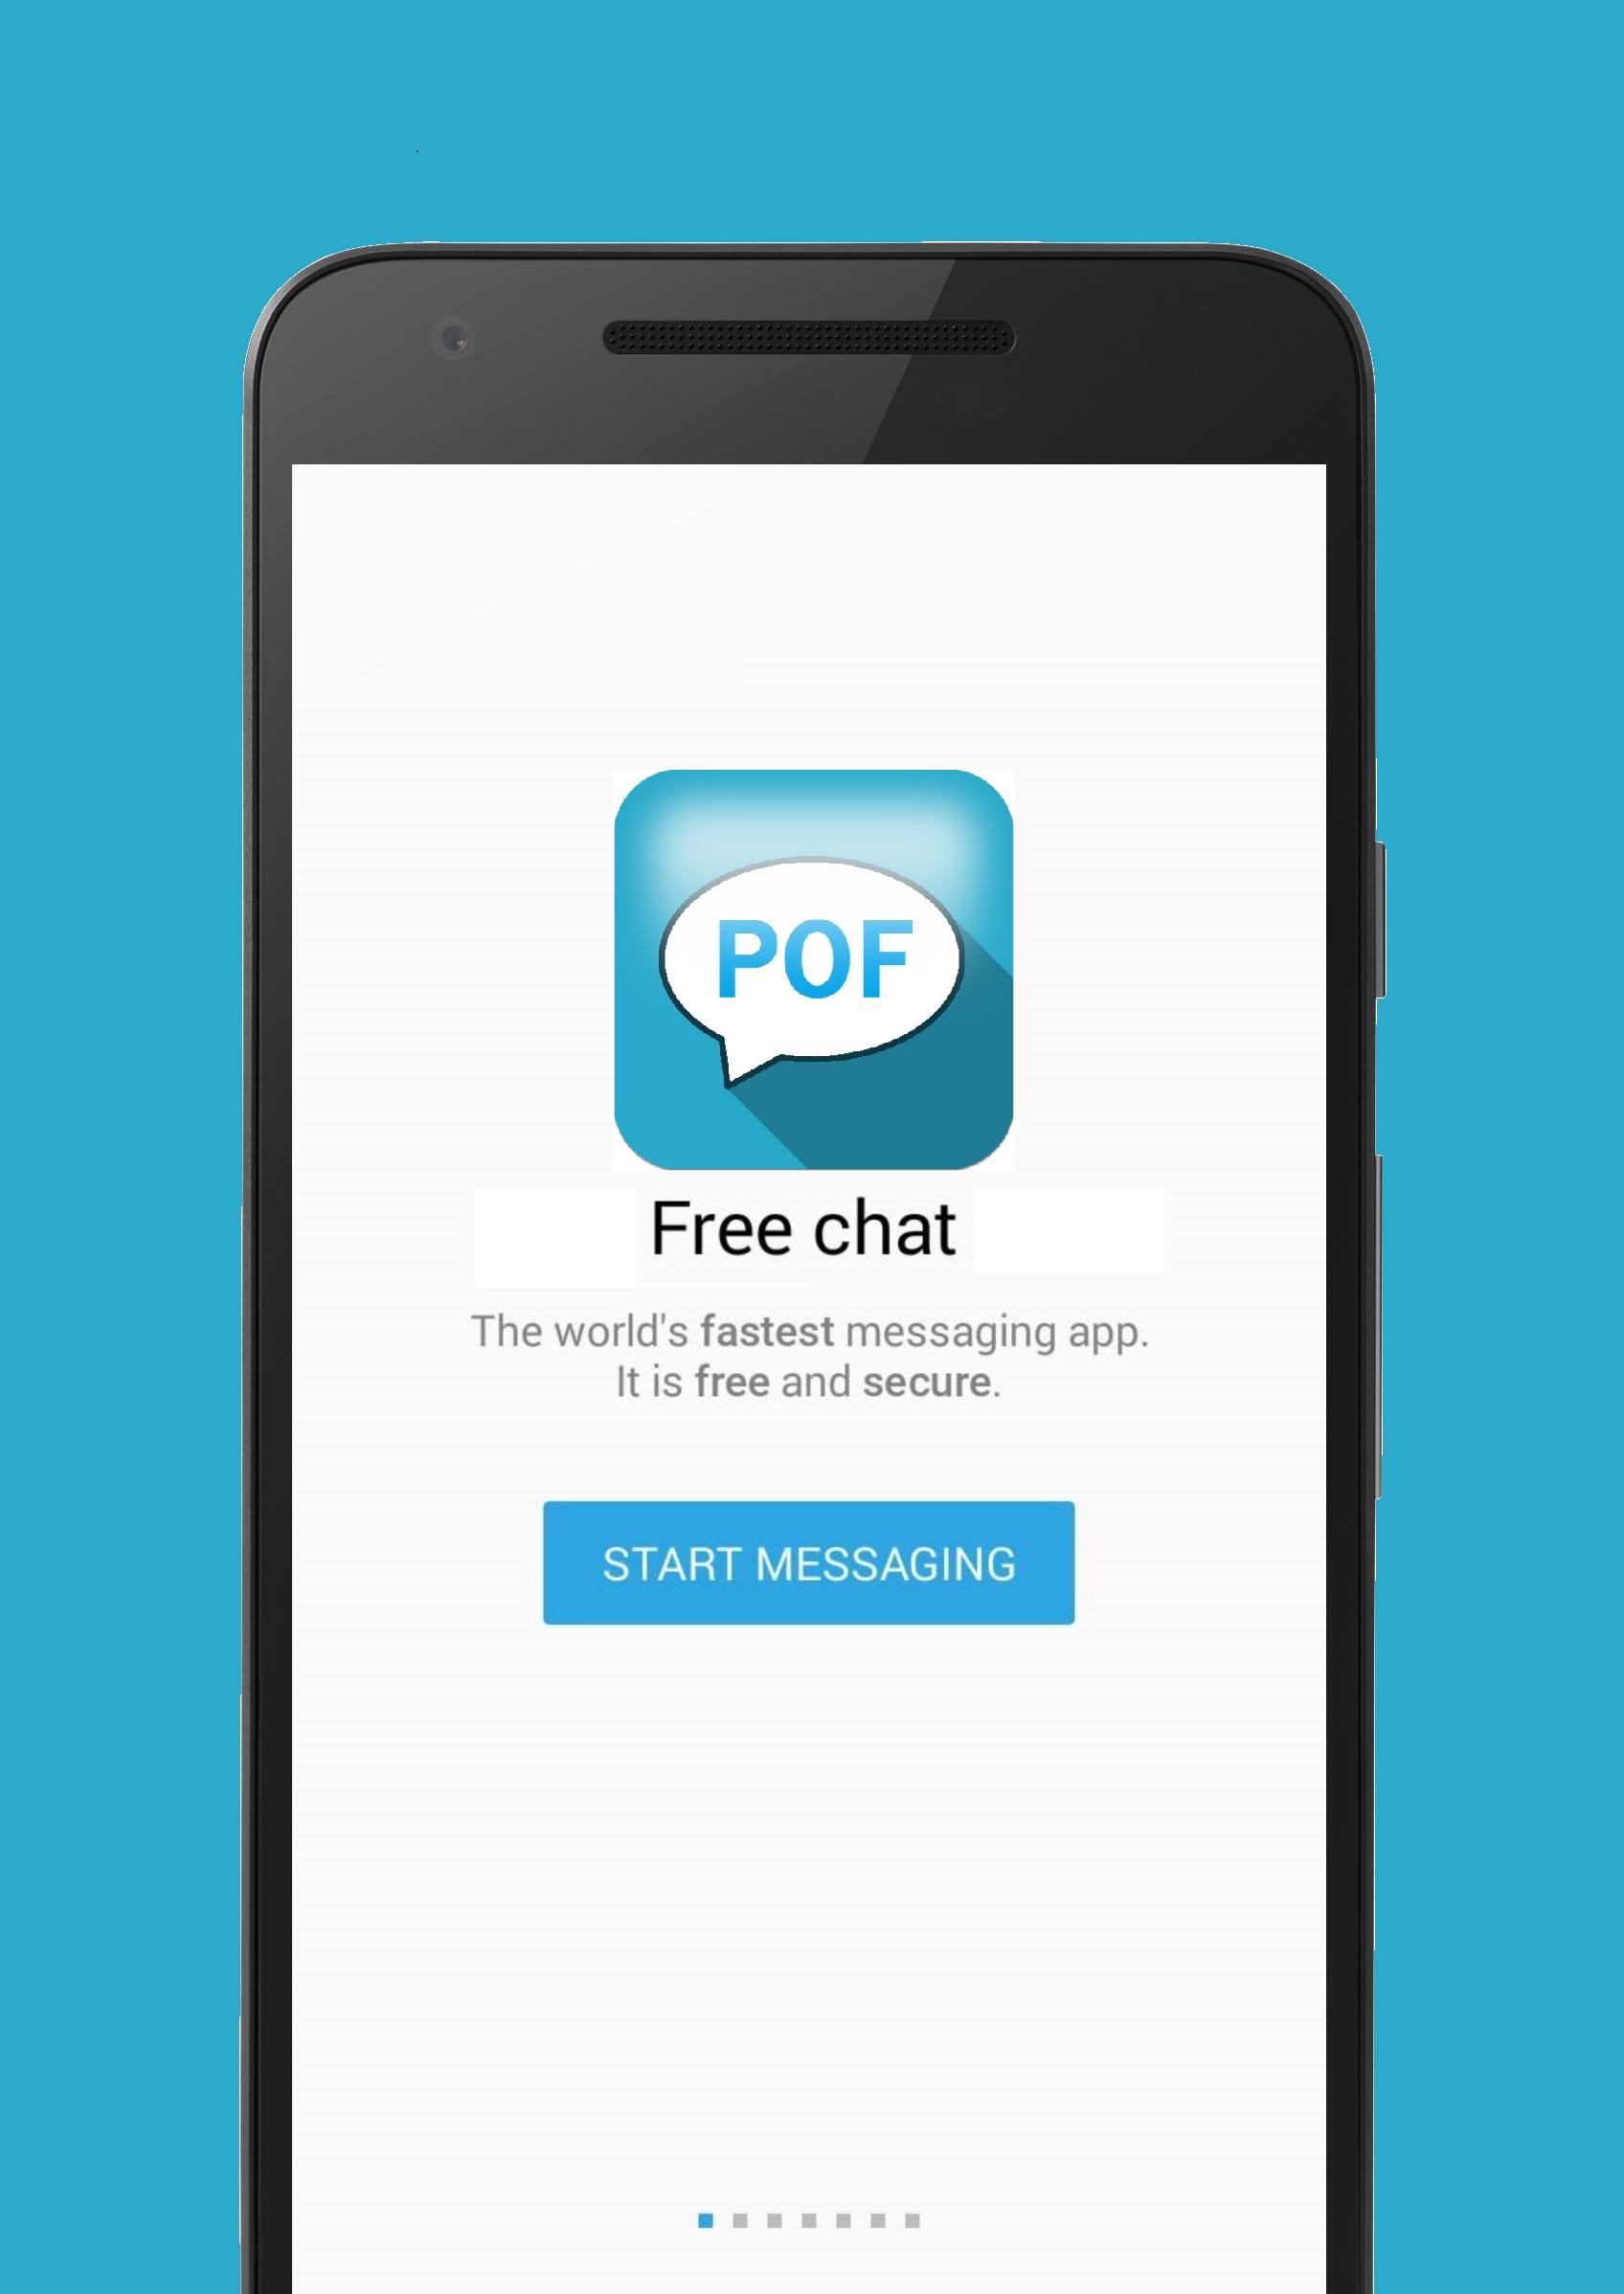 The description of Messenger for POF App.